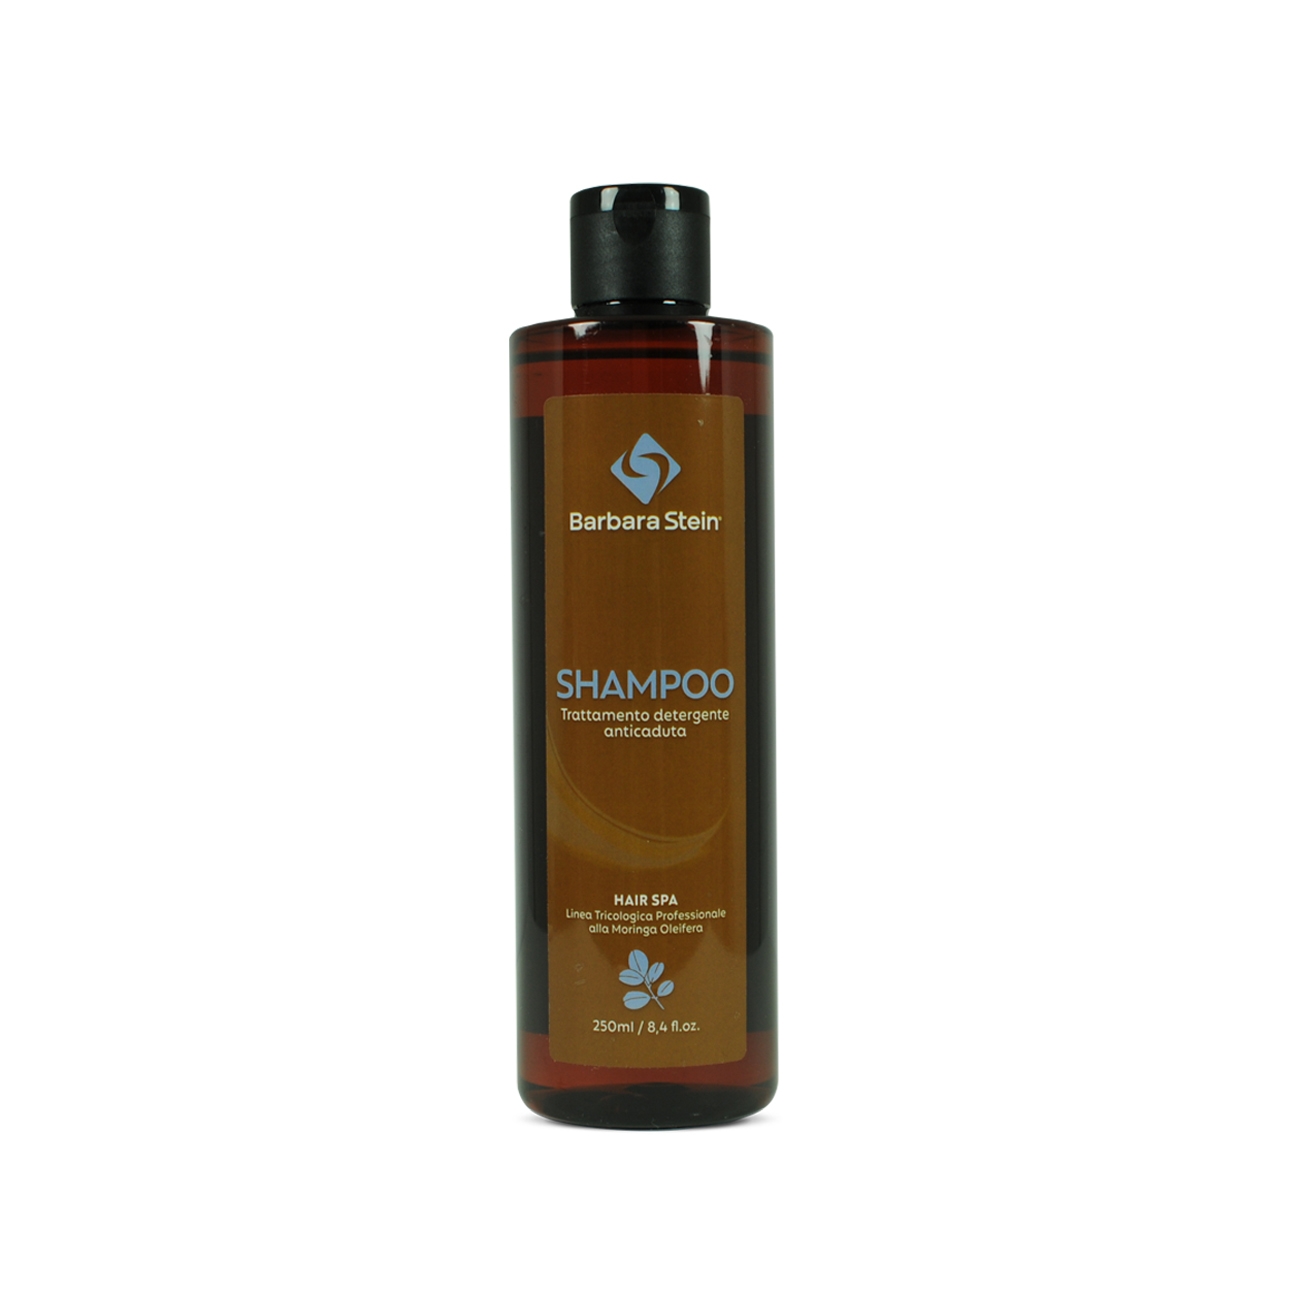 SHAMPOO anticaduta (250 ml)